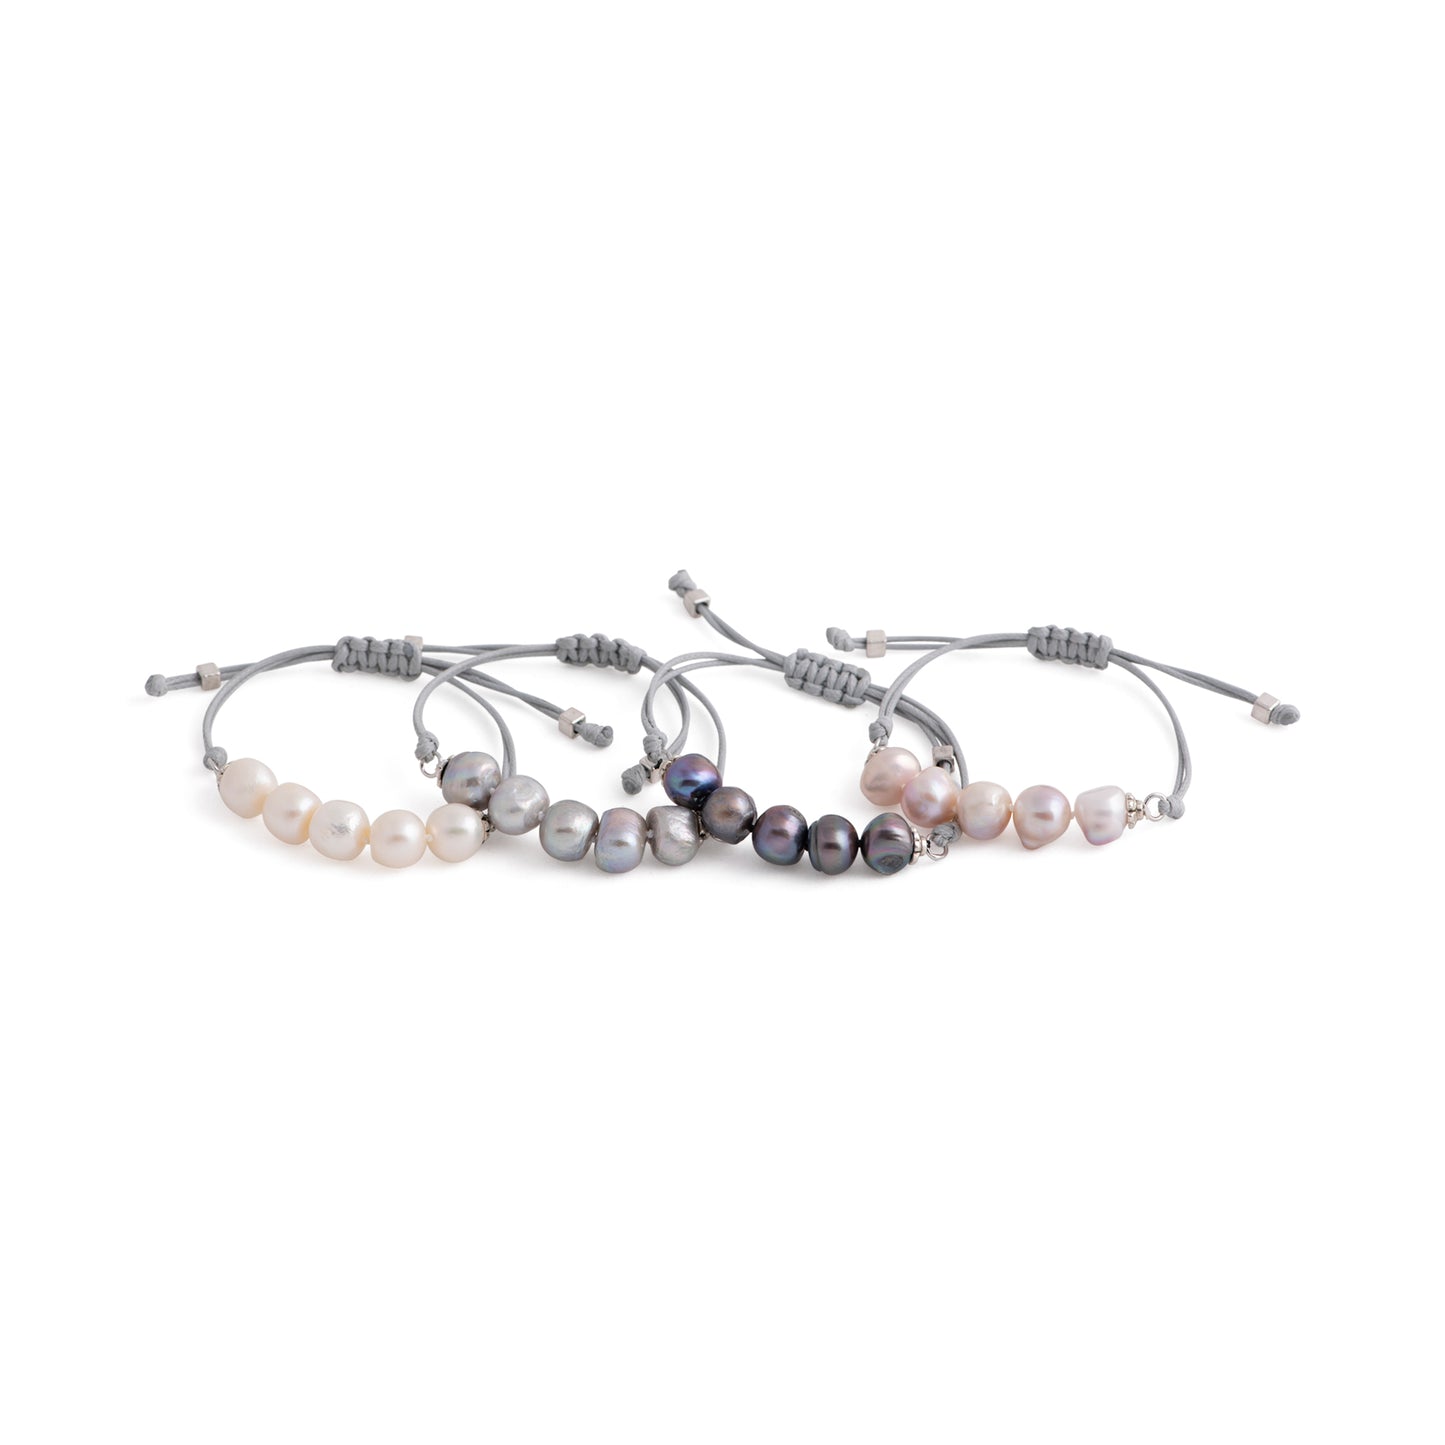 Aegean - Five freshwater pearl adjustable string bracelet (Grey strand, four colors)